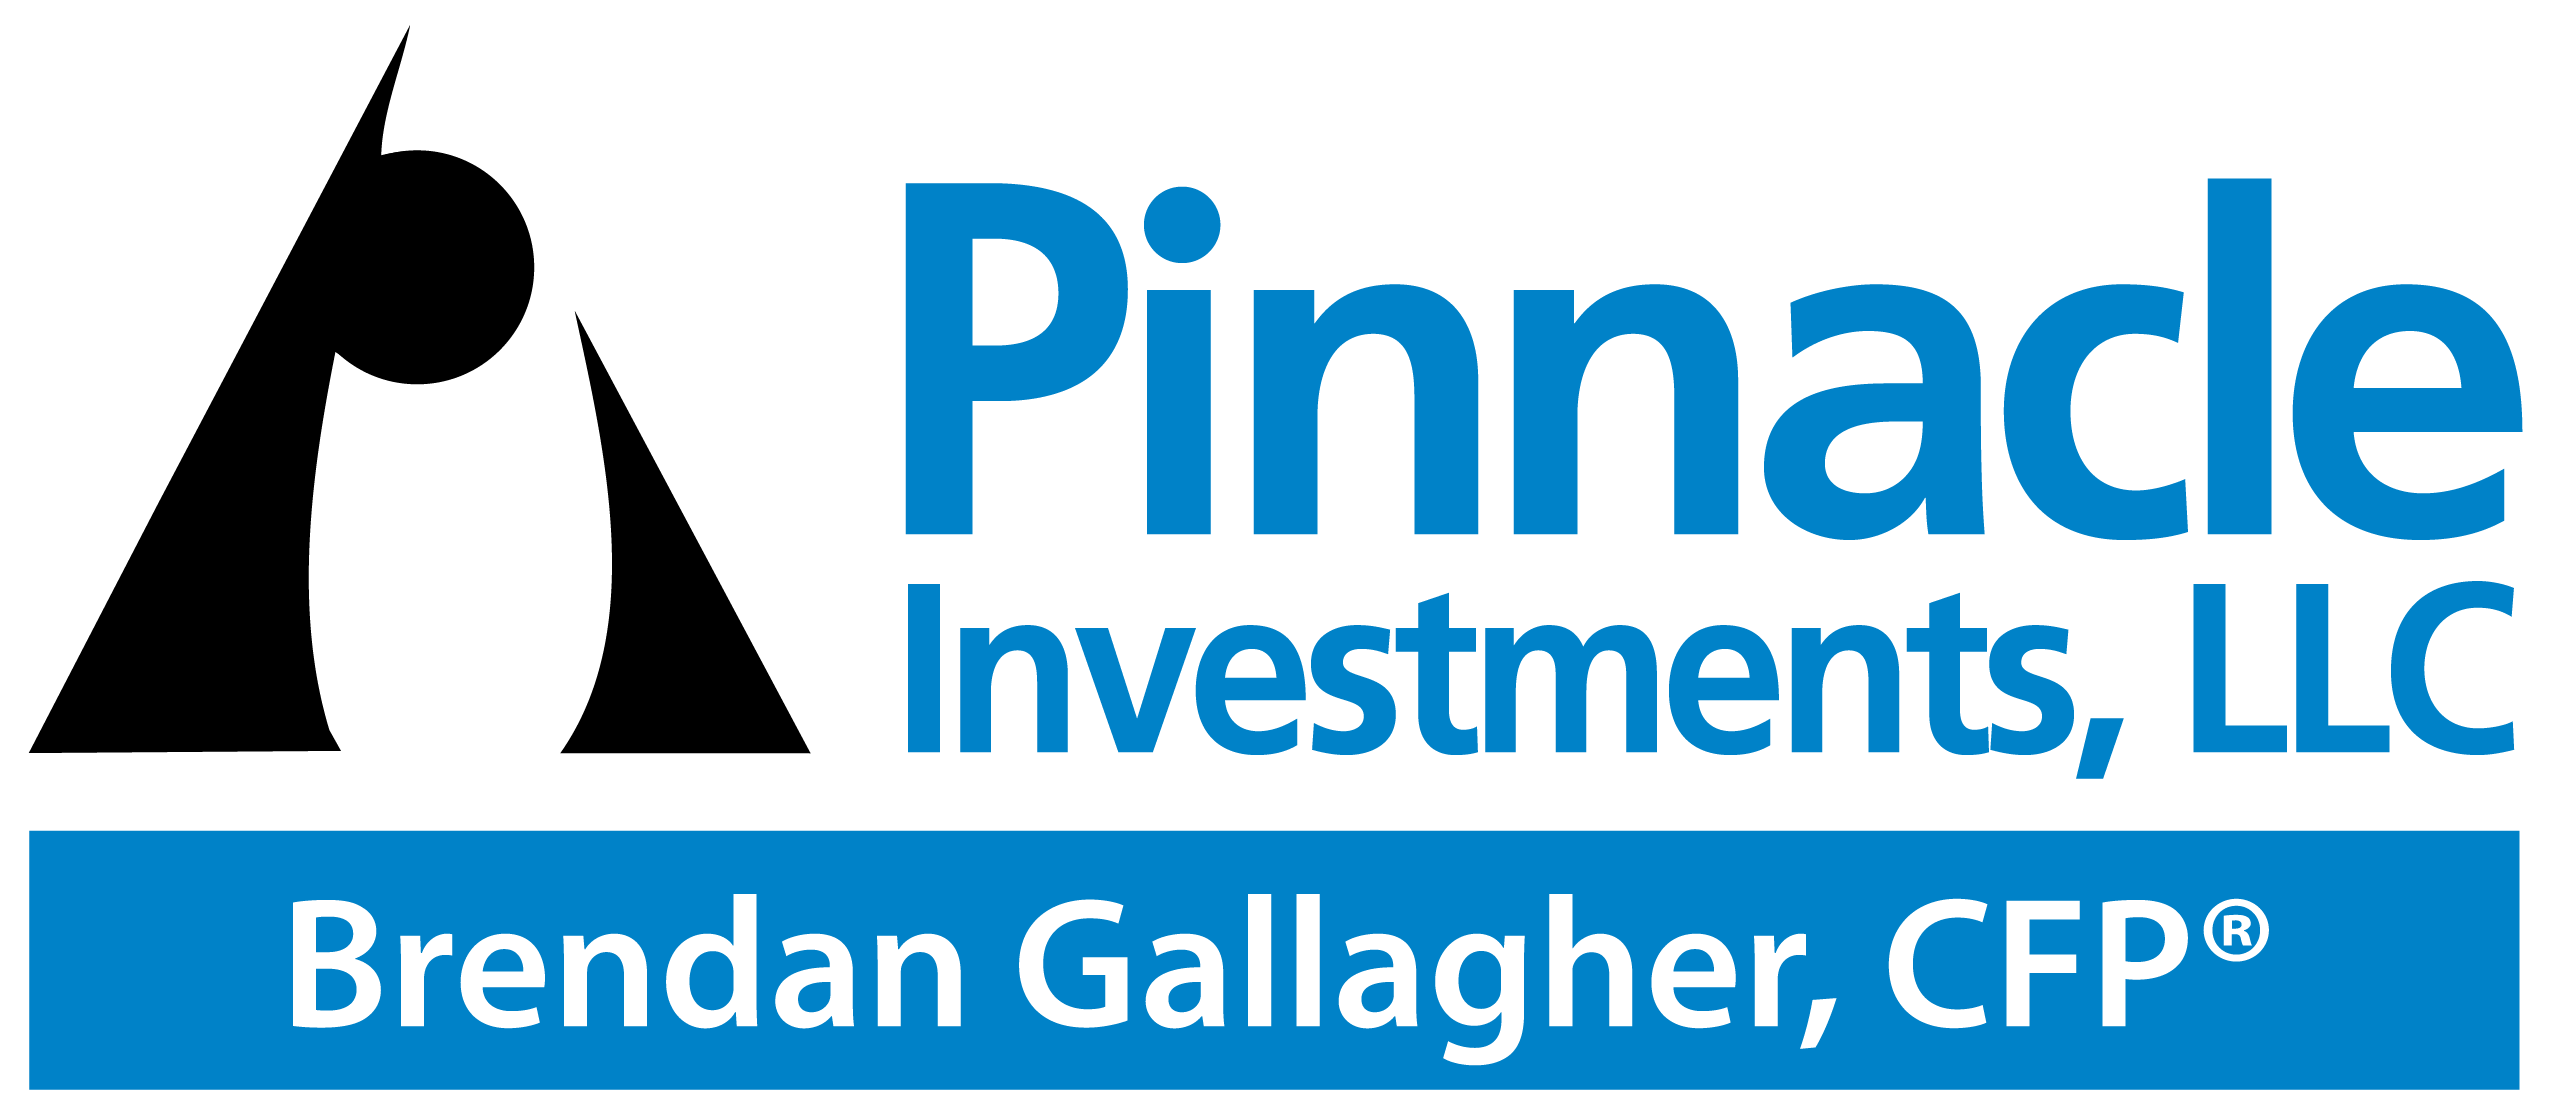 pinnacle investments, llc brendan gallagher, cfp logo